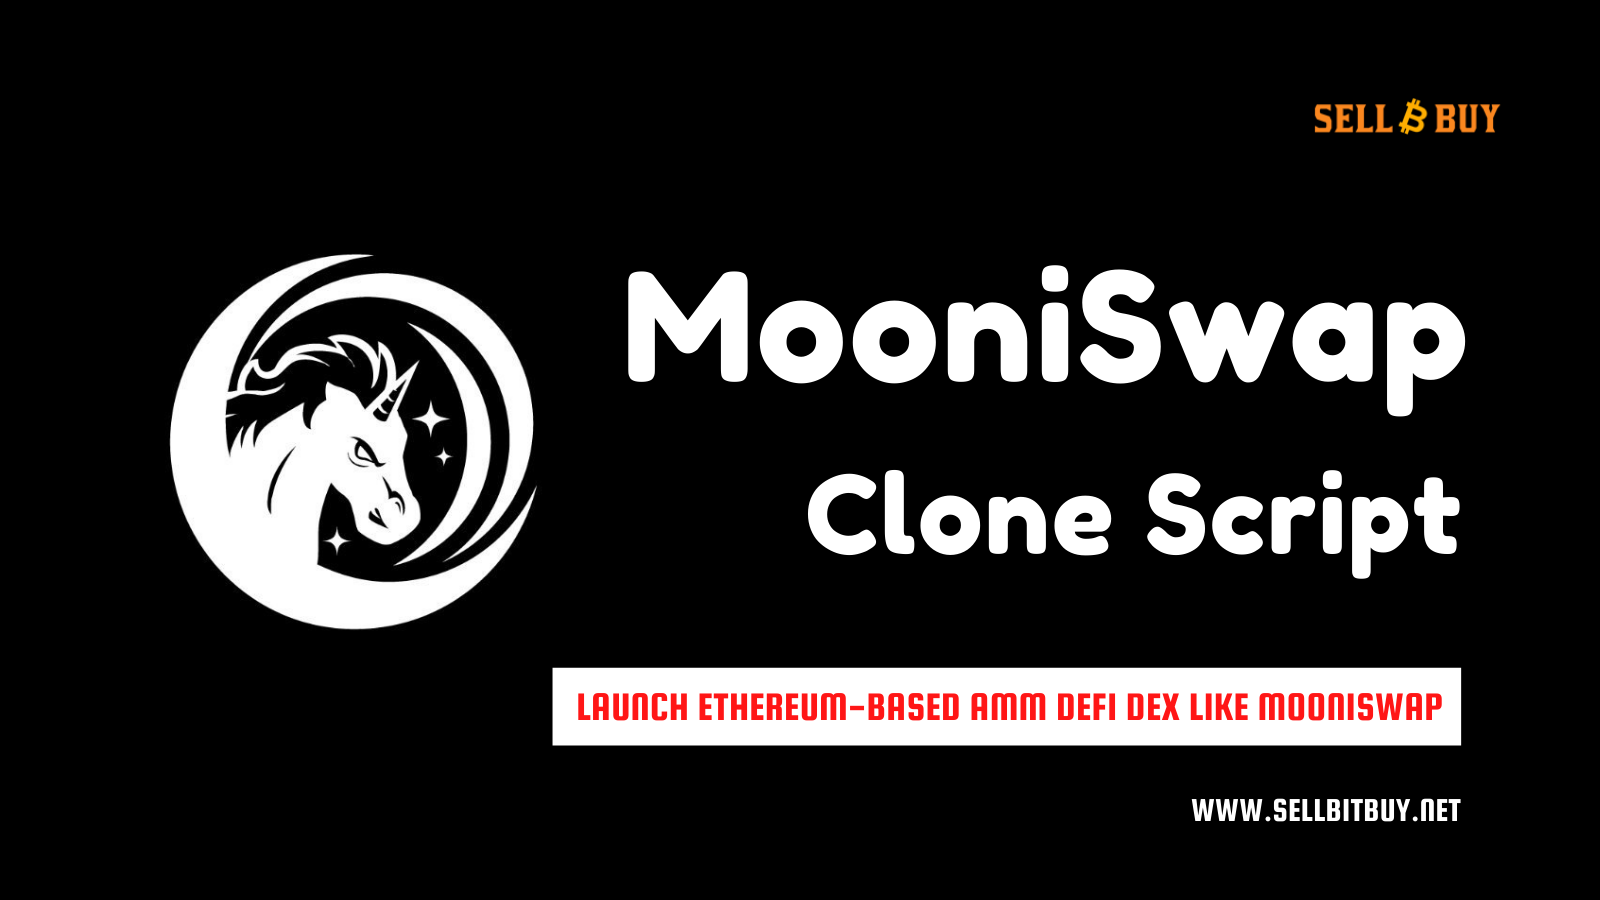 MooniSwap Clone Script - To Launch MooniSwap Like Ethereum Based Decentralized Exchange